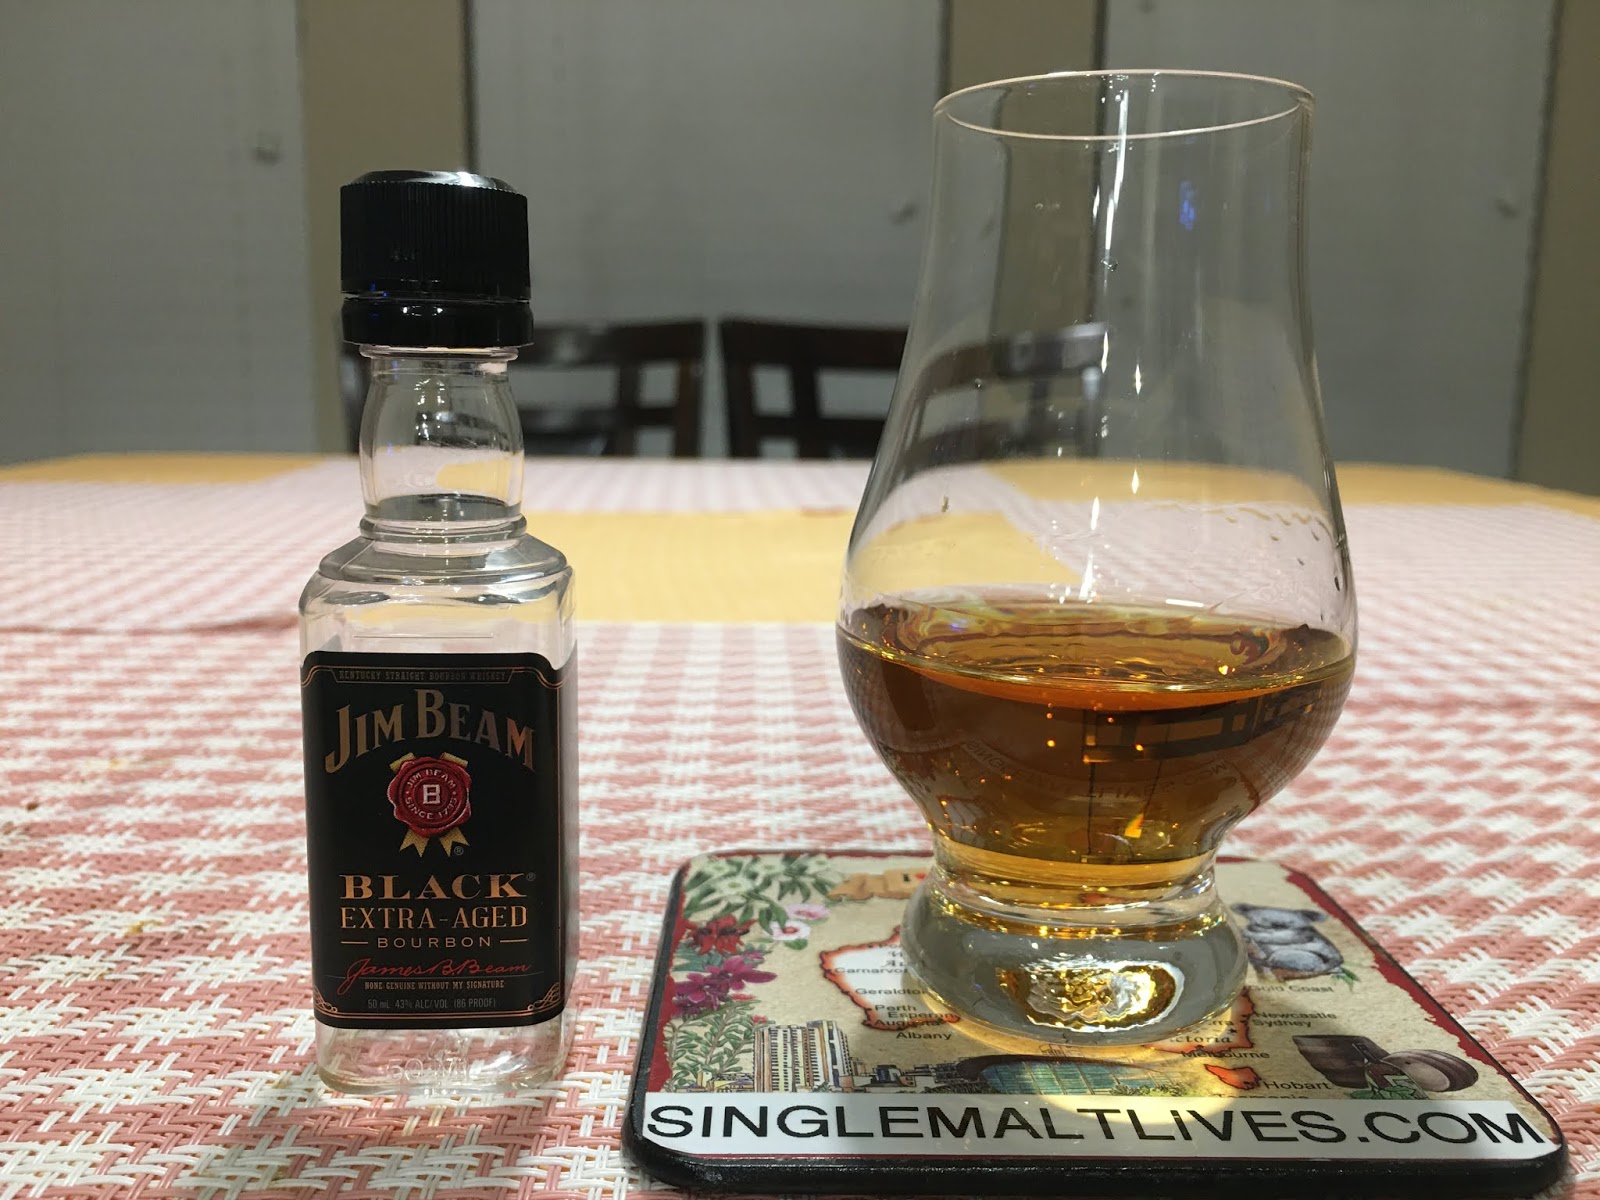 SingleMaltLives.com: Jim Beam Black- Extra Aged Bourbon